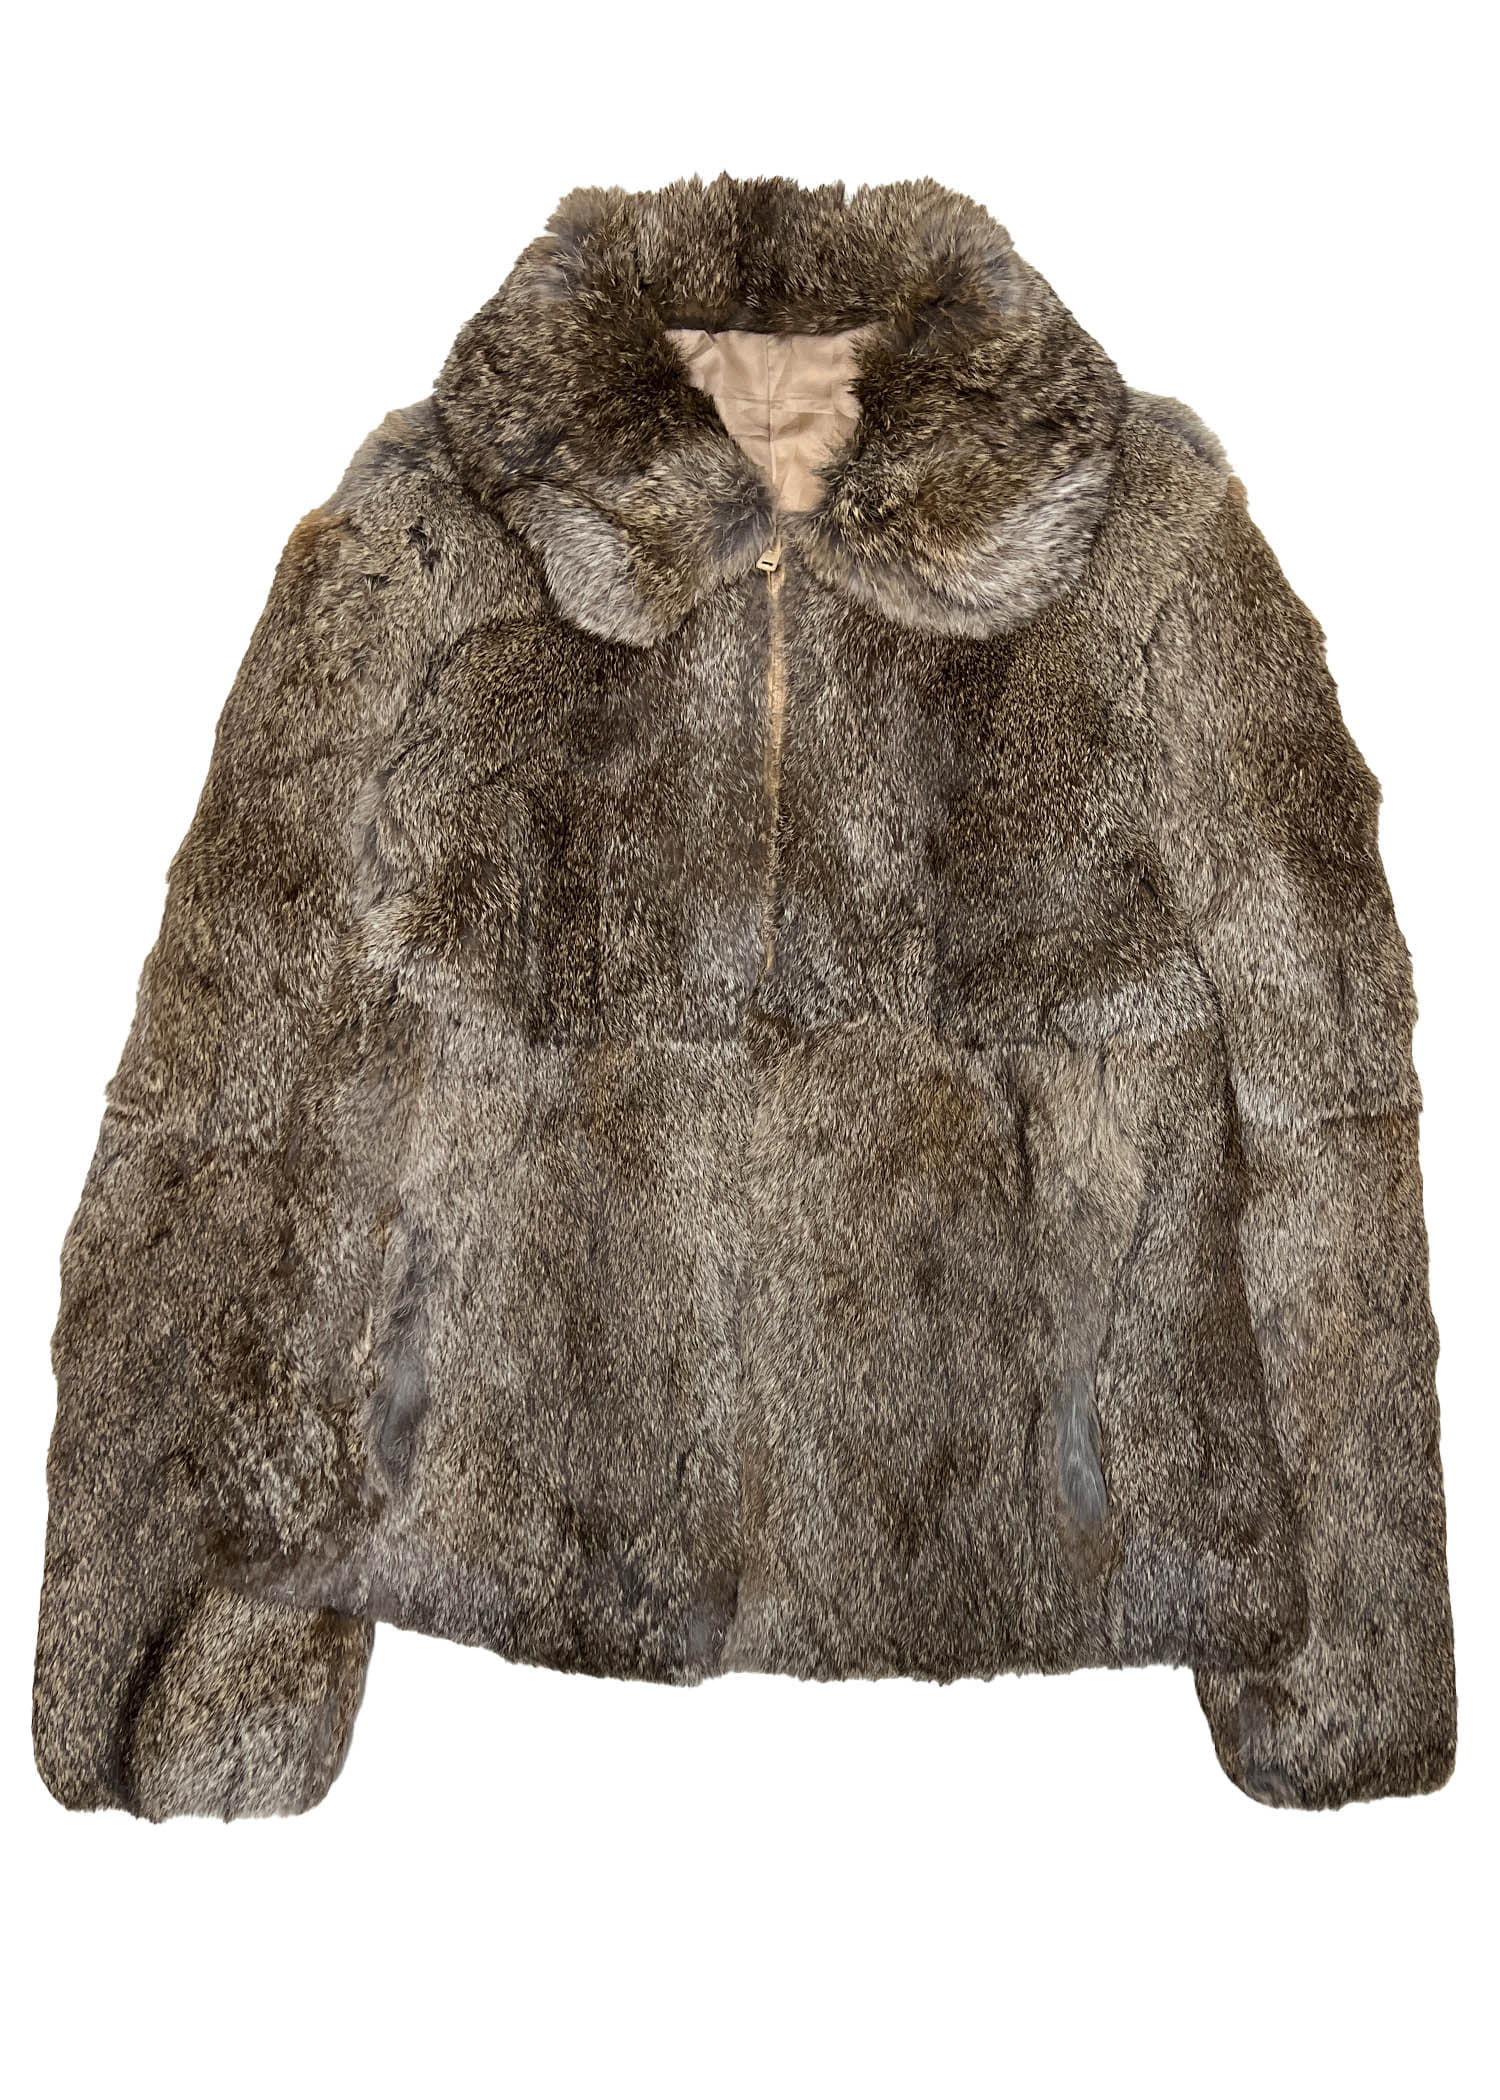 vintage rabbit fur jacket